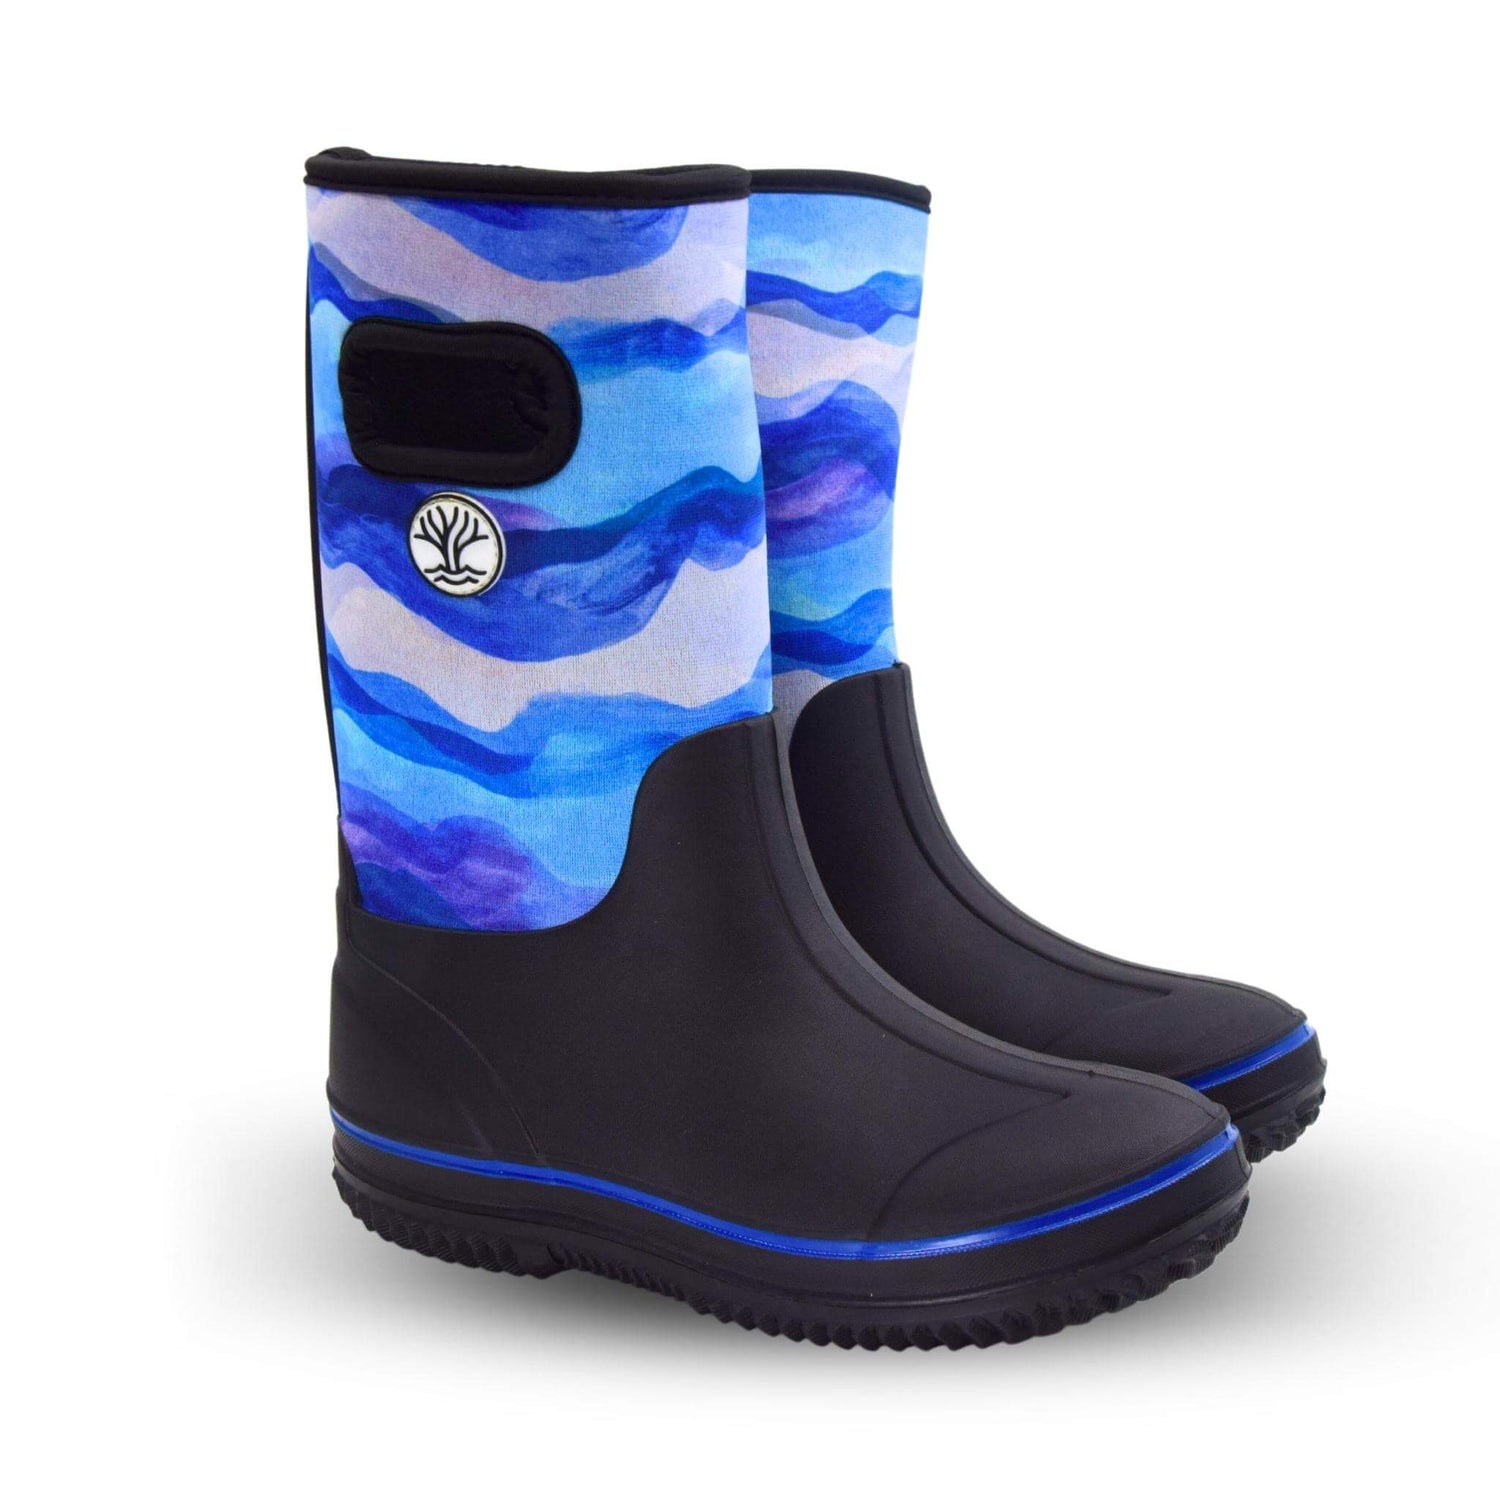 Wavetree Gumboot made of neoprene with blue wave design. Pair of waterproof rain boots.